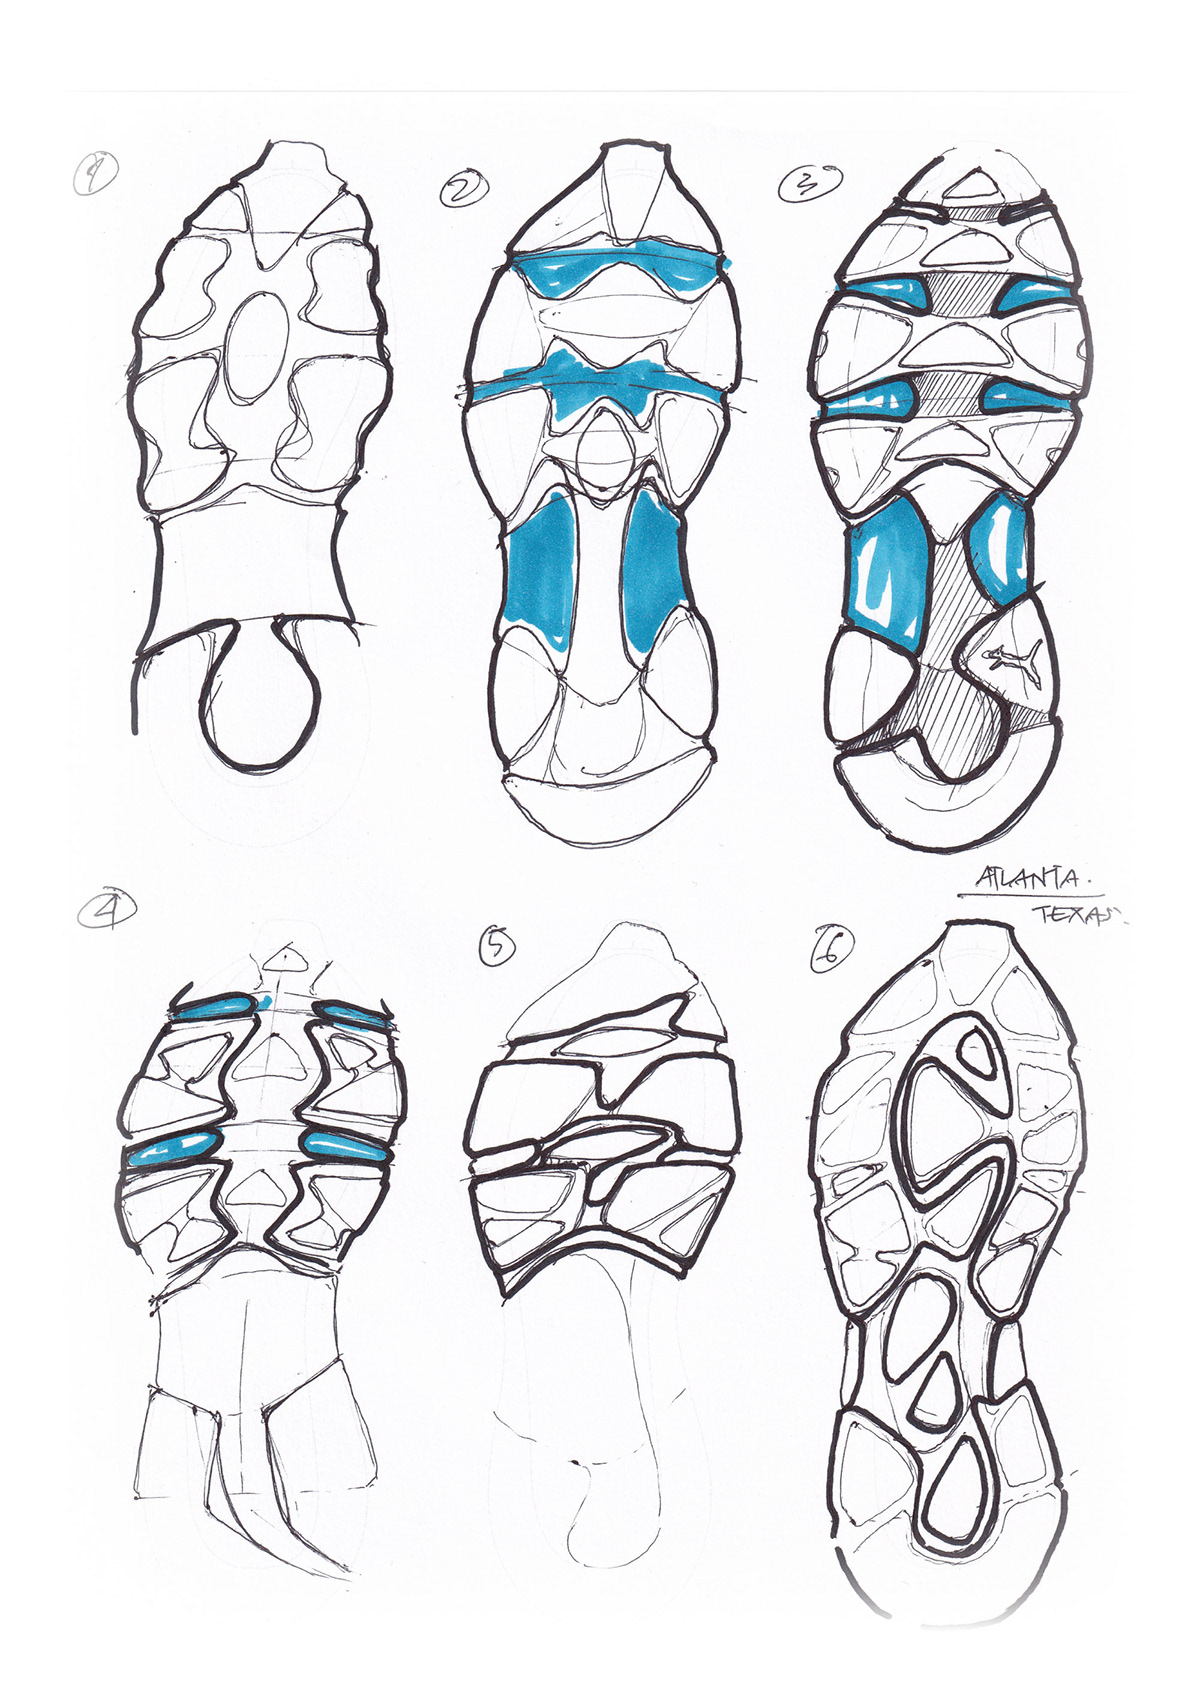 Fashion  footwear design puma akira lqdcell Omega sketch Creative Direction  sneaker Design Project